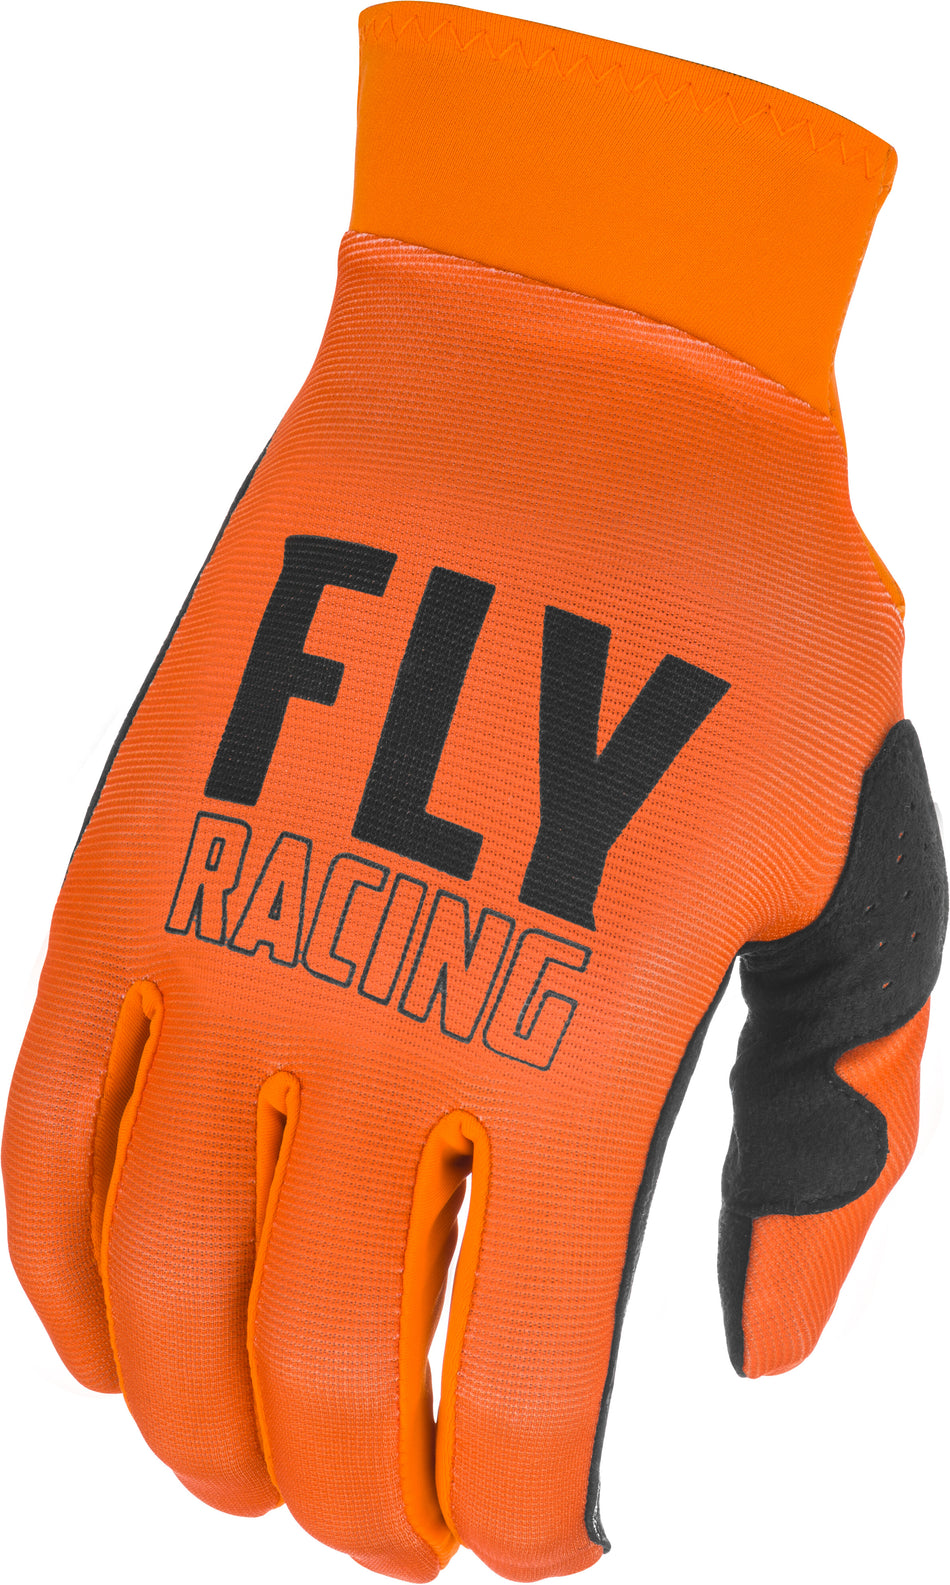 FLY RACING Pro Lite Gloves Orange/Black Sz 11 374-85811